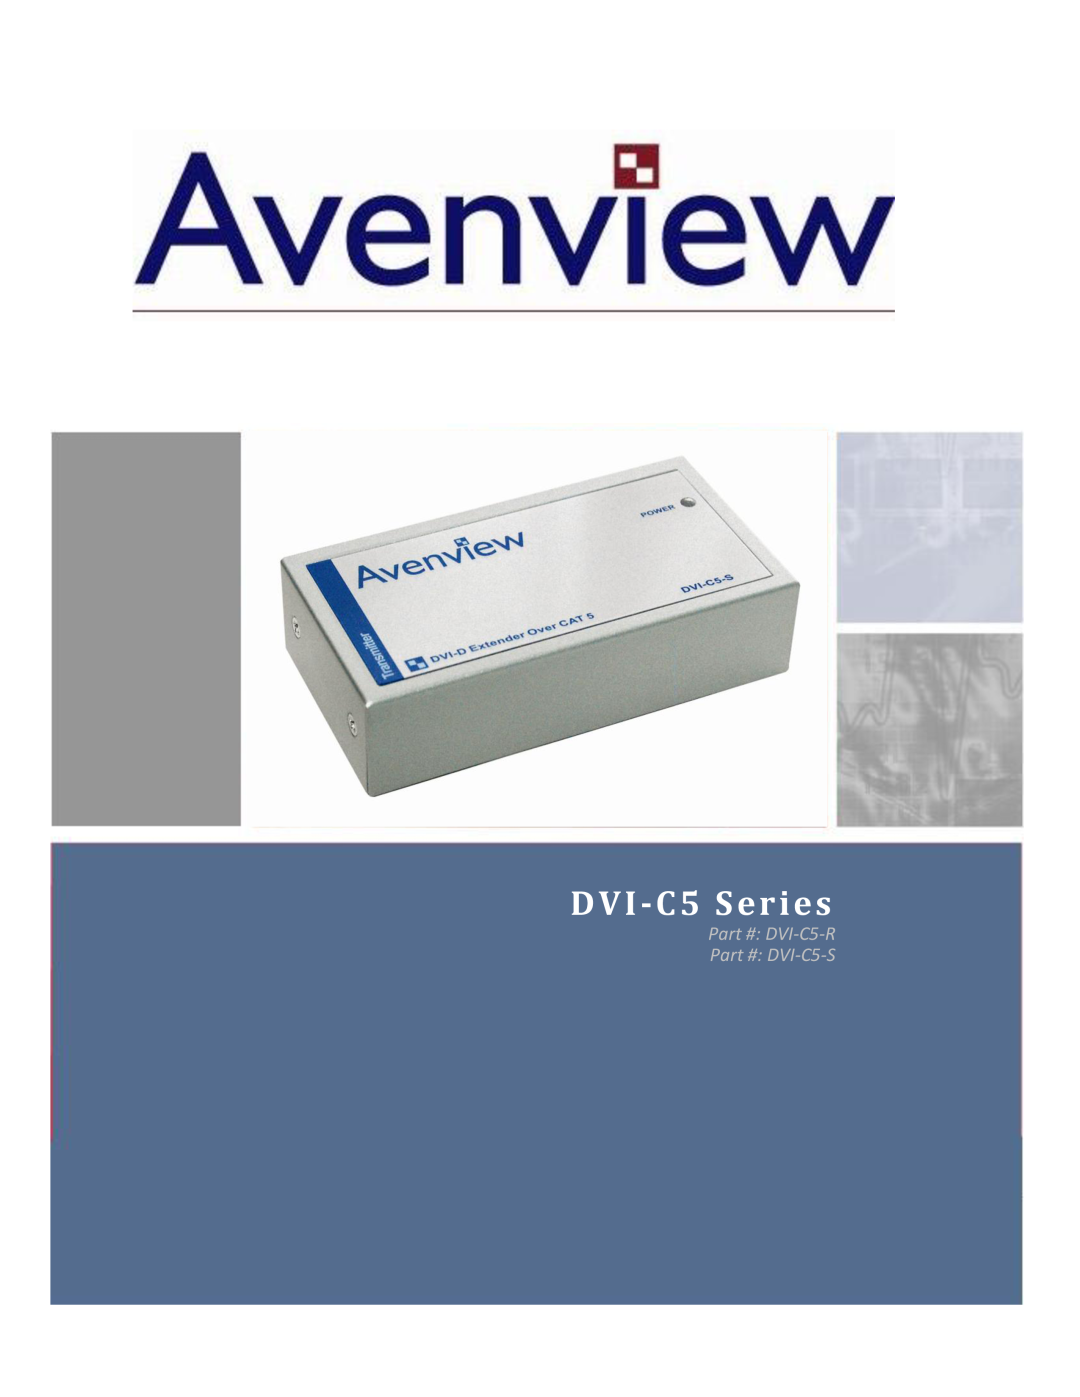 Avenview manual DVI-C5Series, DVI-C5-R DVI-C5-S 